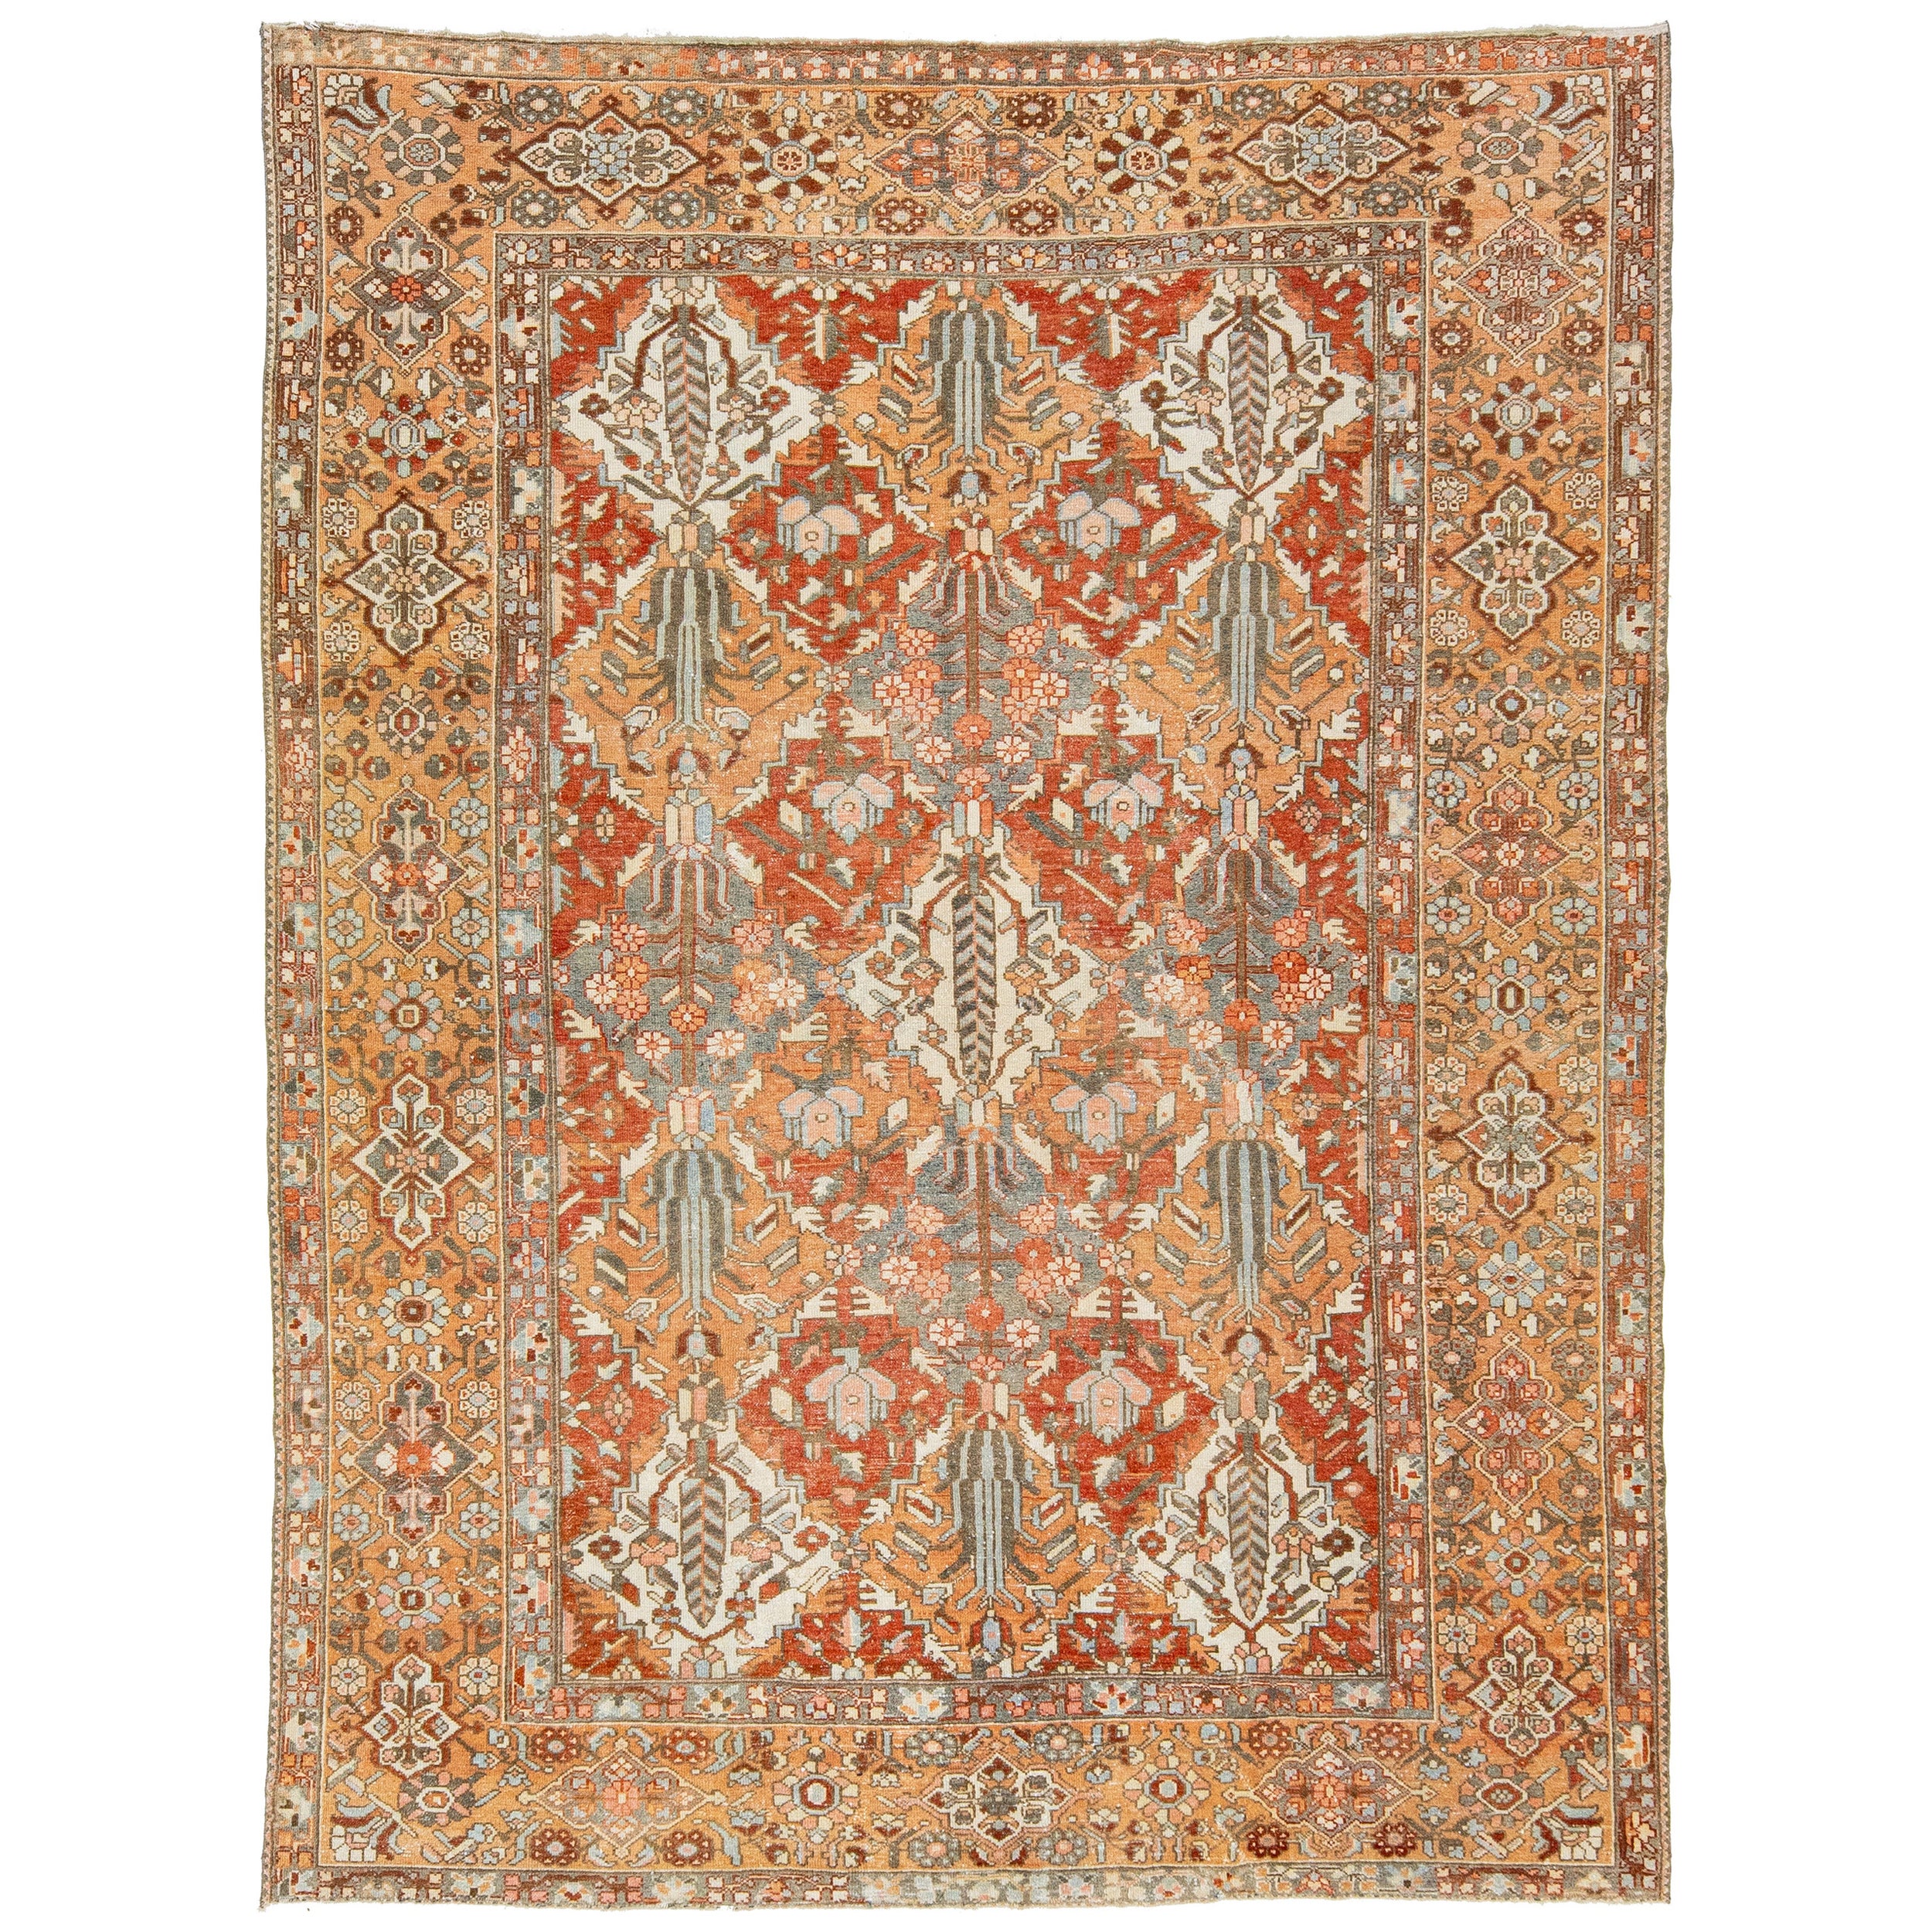 Handmade 1920s Persian Bakhtiari Wool Rug with Floral Motif In Orange  For Sale